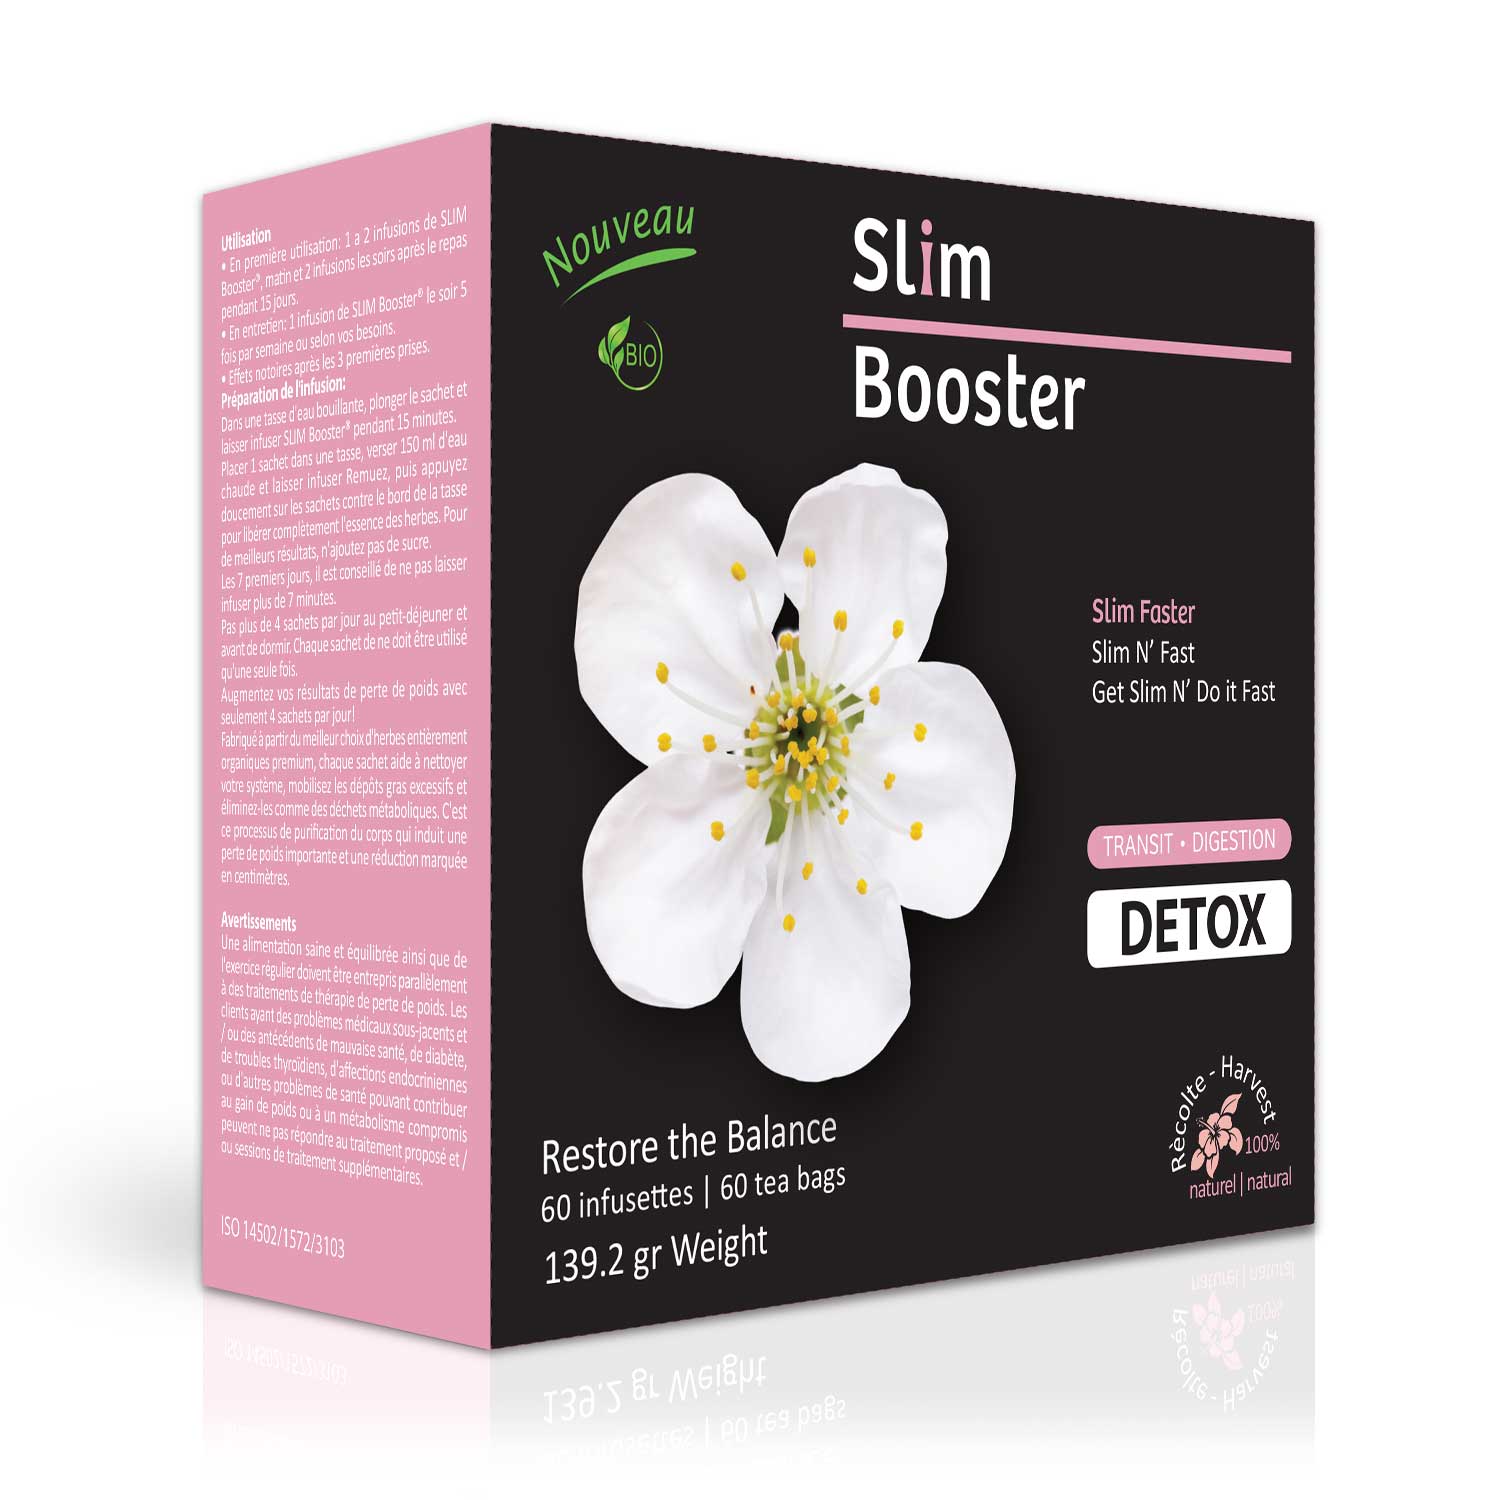 Herbal Slimming tea by Nouveau Paris. 100% natural organic detox